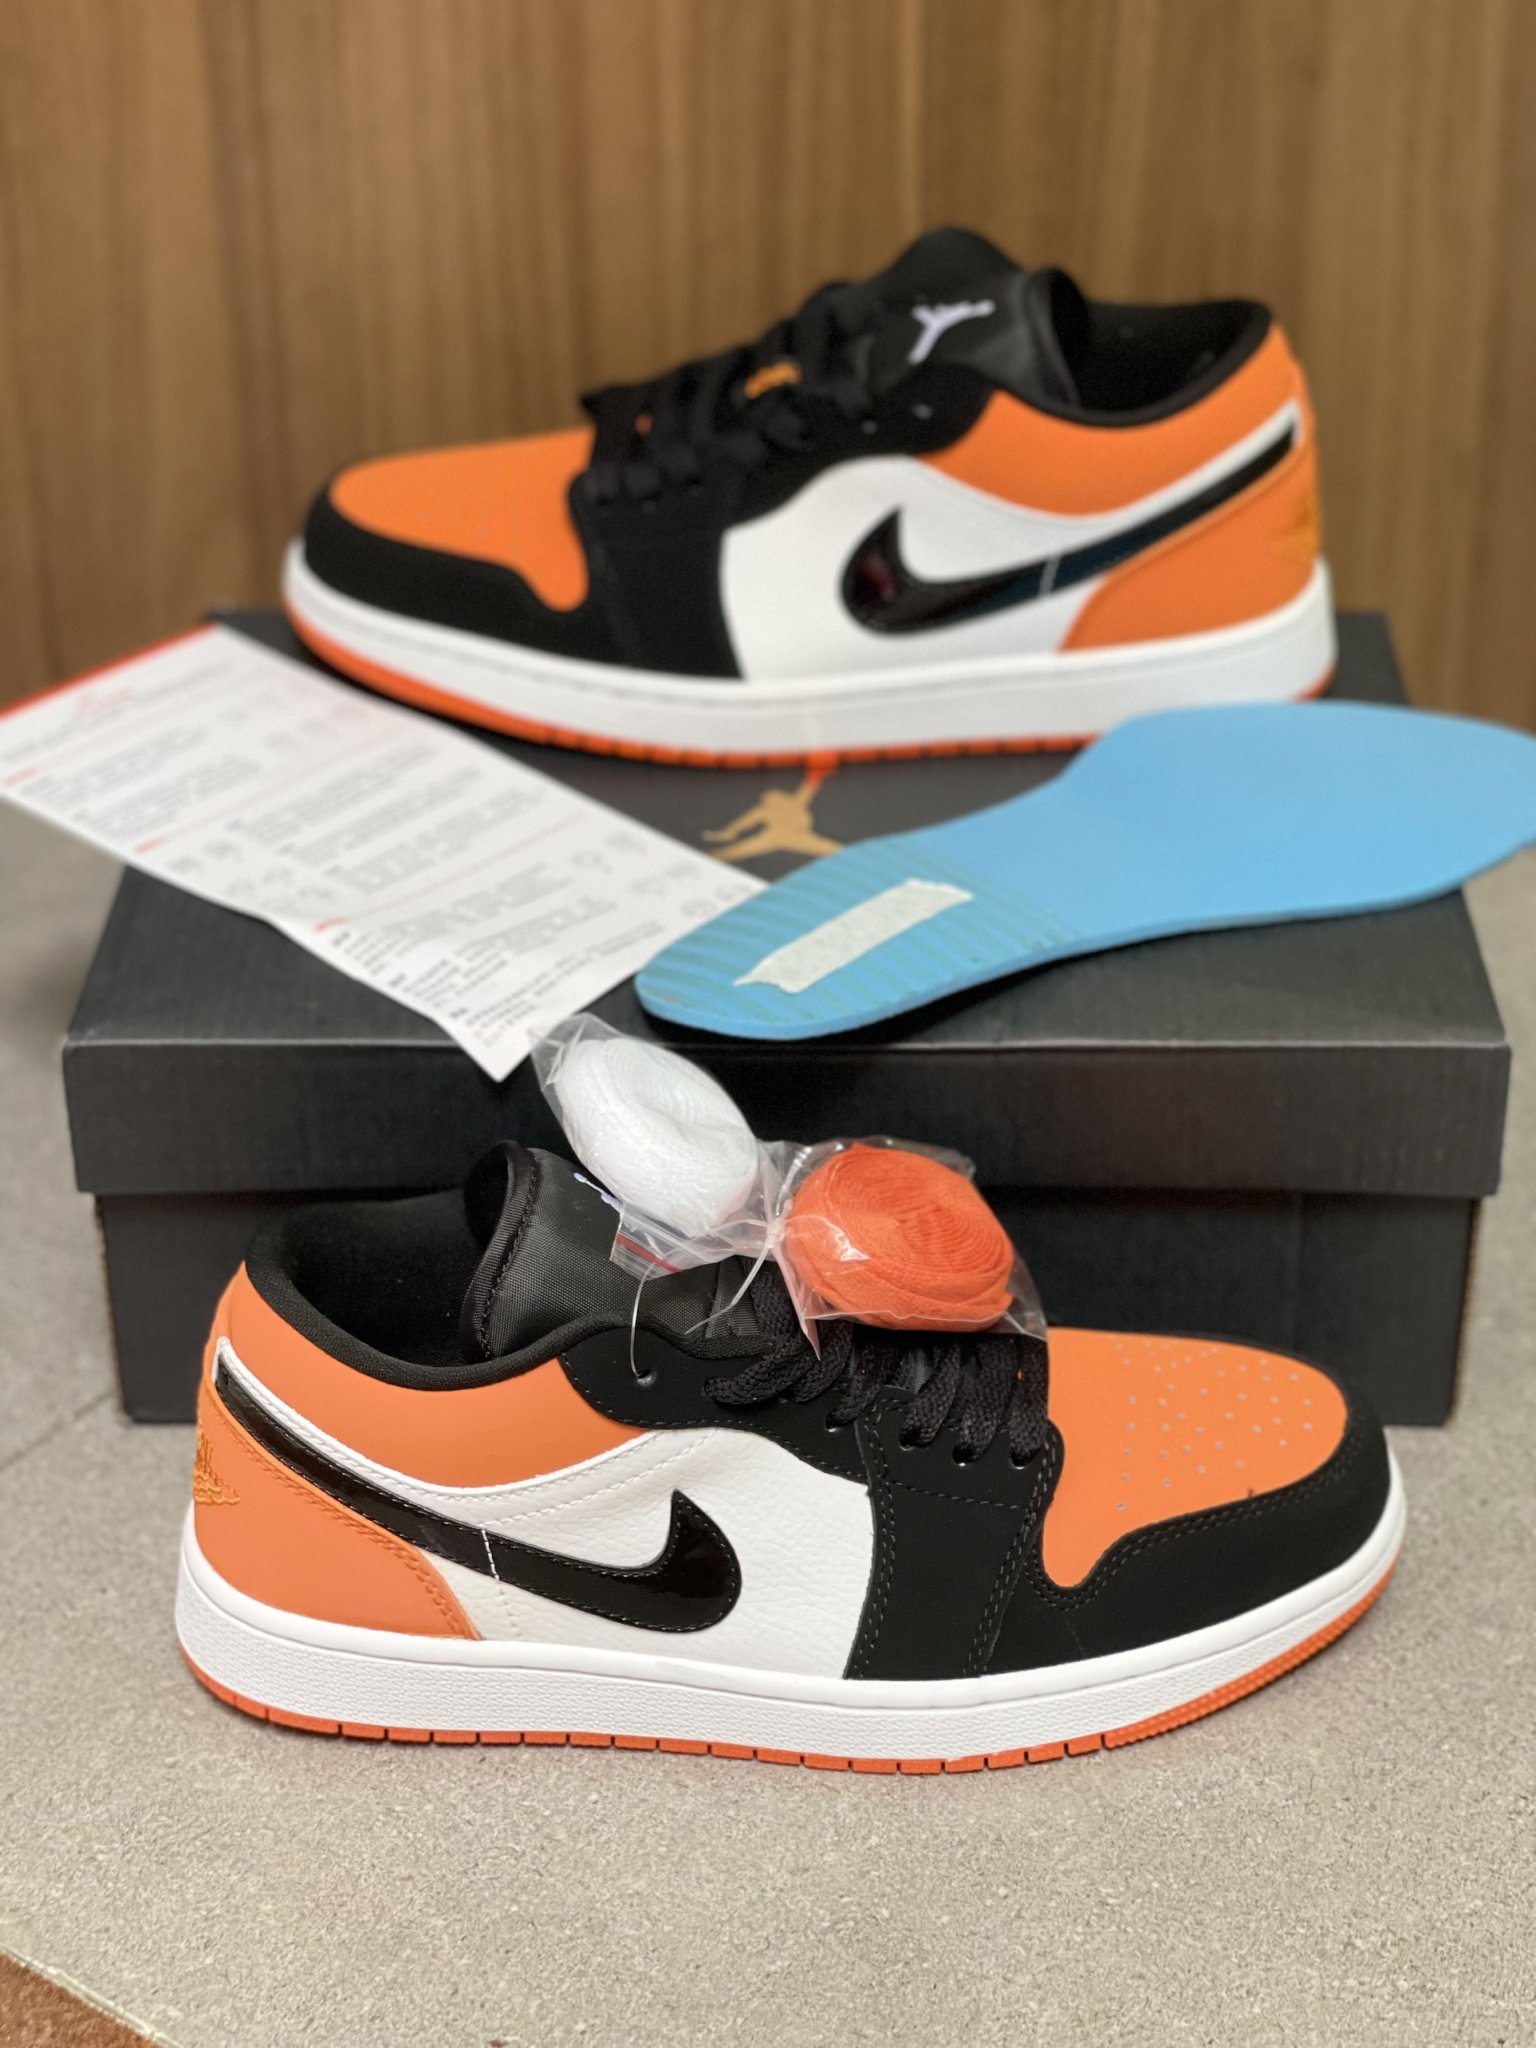 Giày Jordan 1 Orange Rep 1:1 chuẩn phiên bản gốc